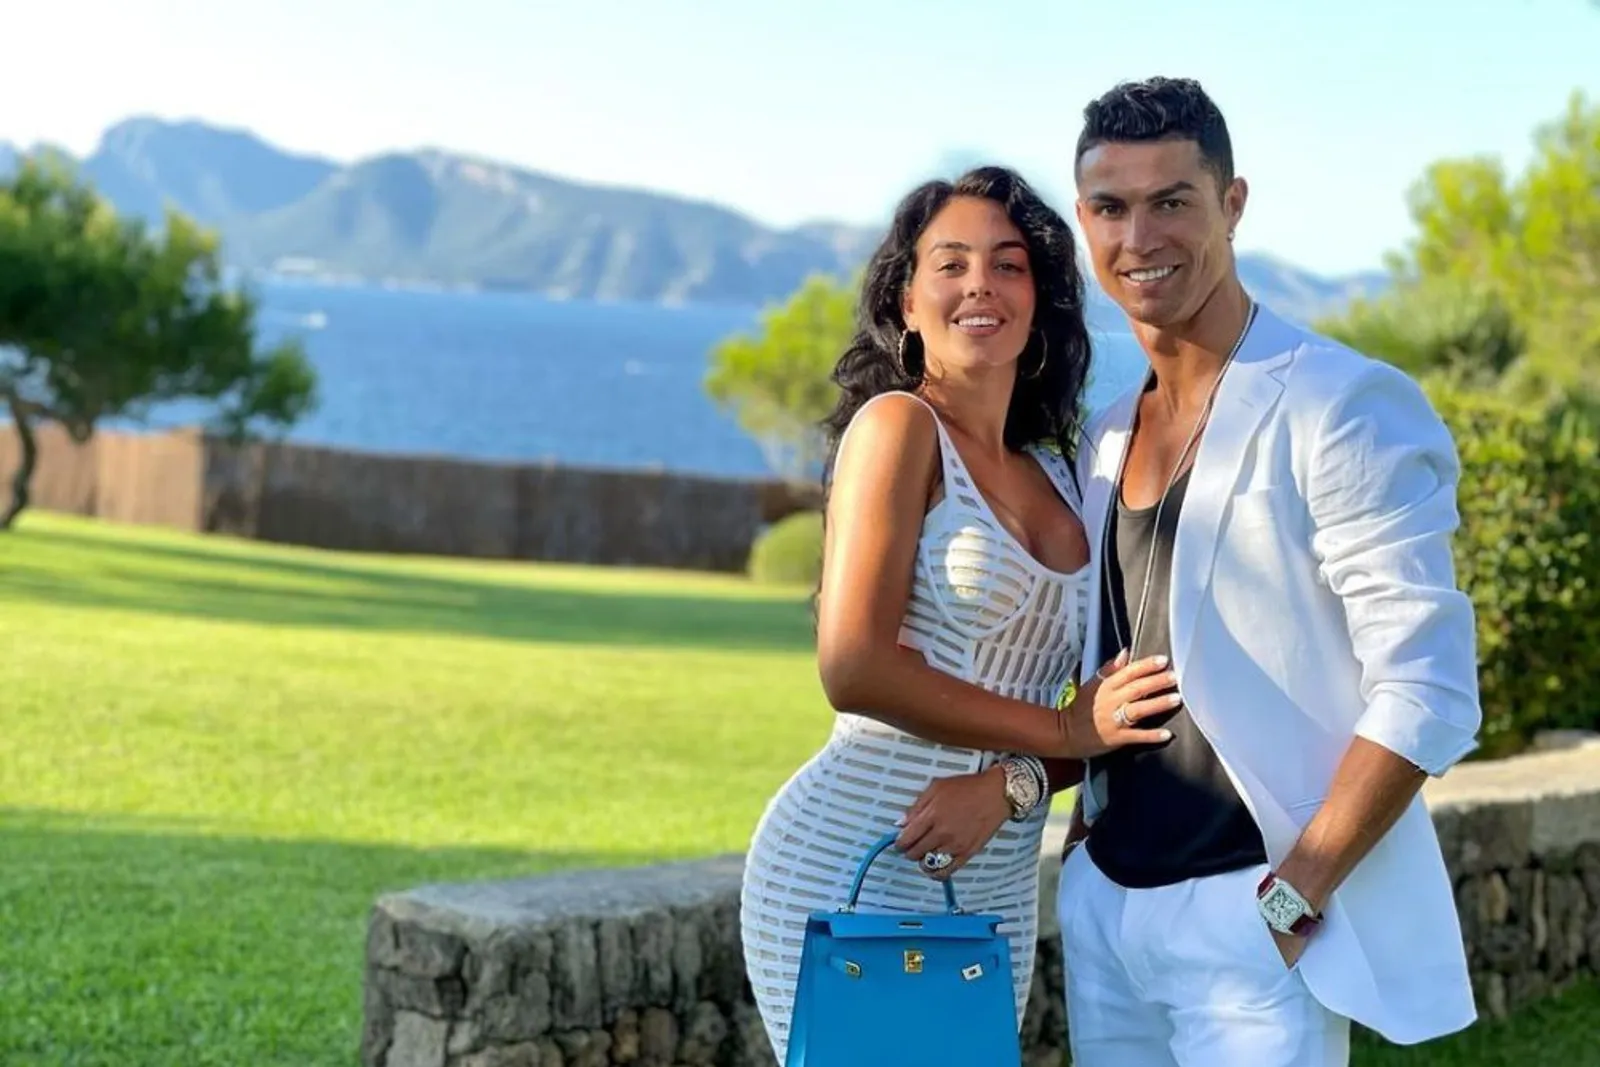 Cristiano Ronaldo & Pacar Menetap di Arab Tanpa Menikah, Ini Faktanya